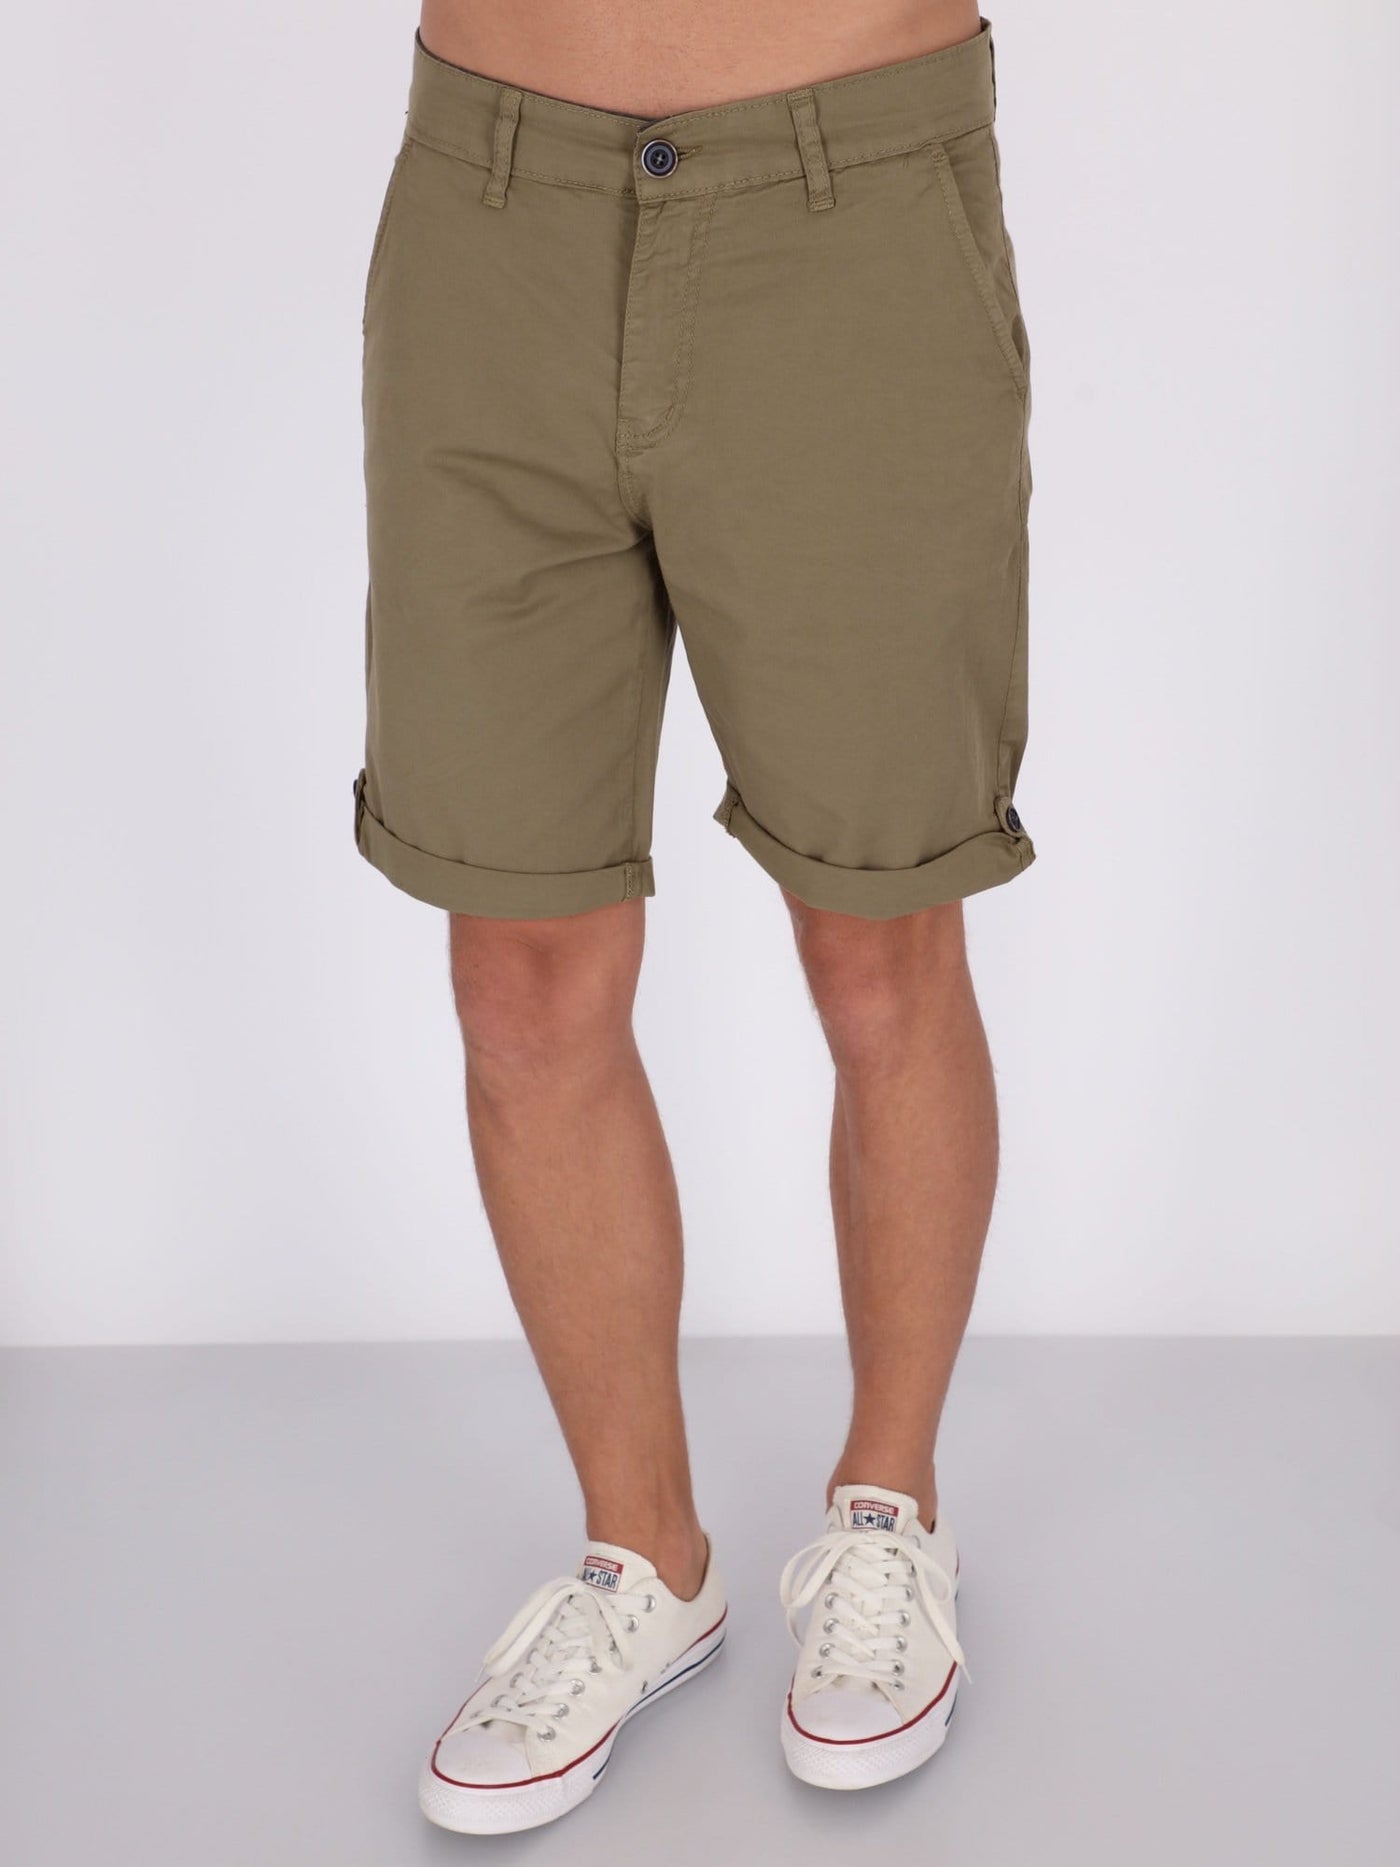 OR Pants & Shorts Flat Front Regular Fit Shorts